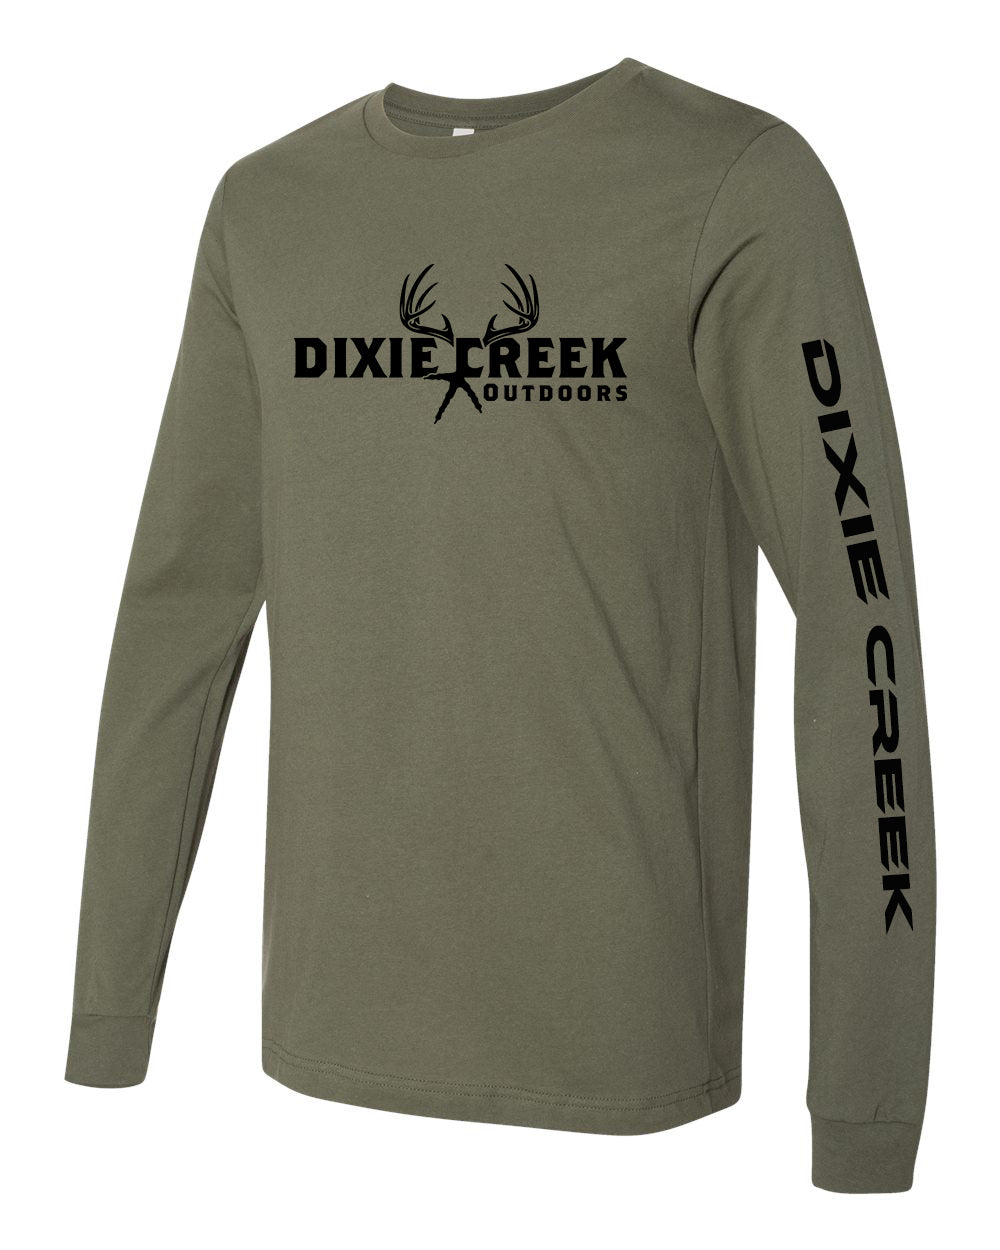 Dixie Creek Outdoors With Sleeve Print - Black Logo